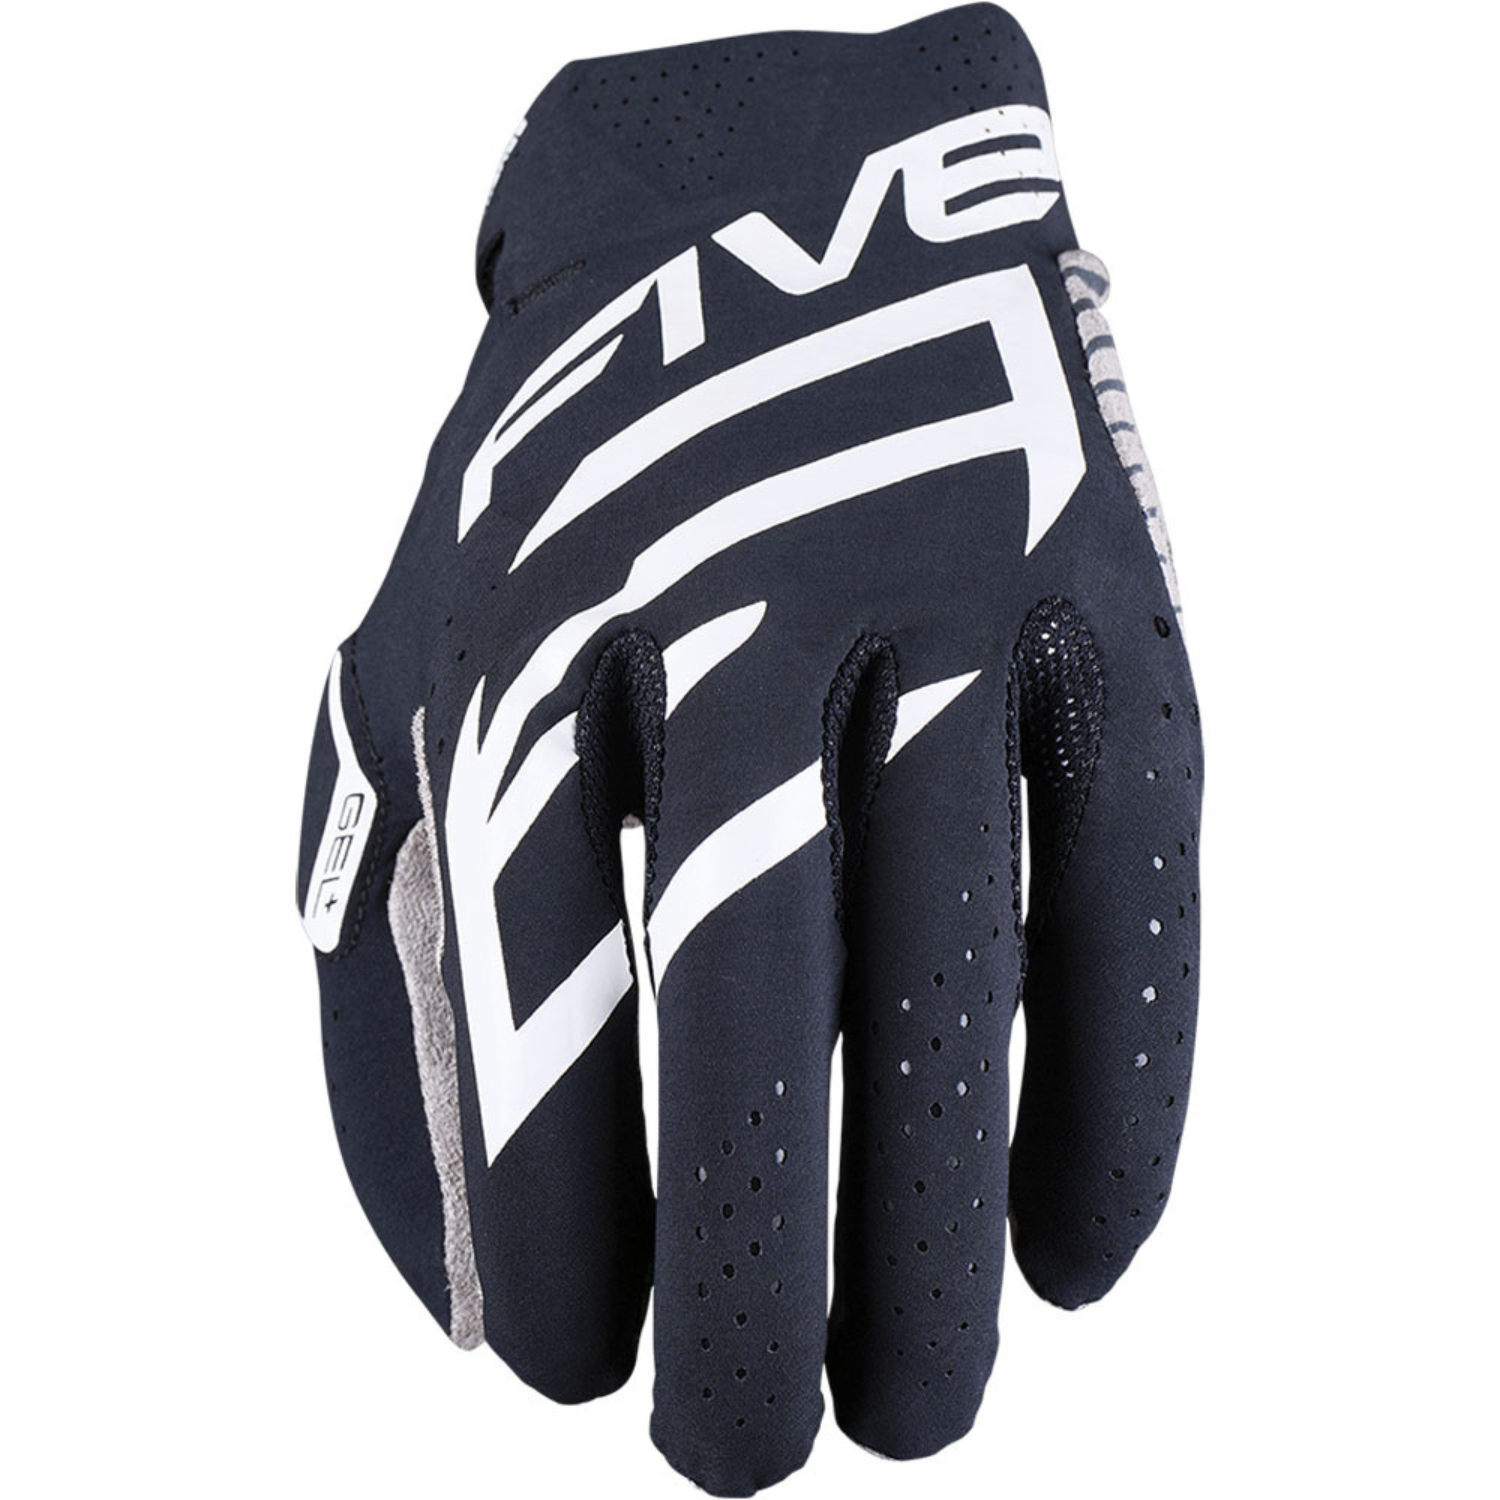 Image of Five MXF Race Gloves Black White Größe M